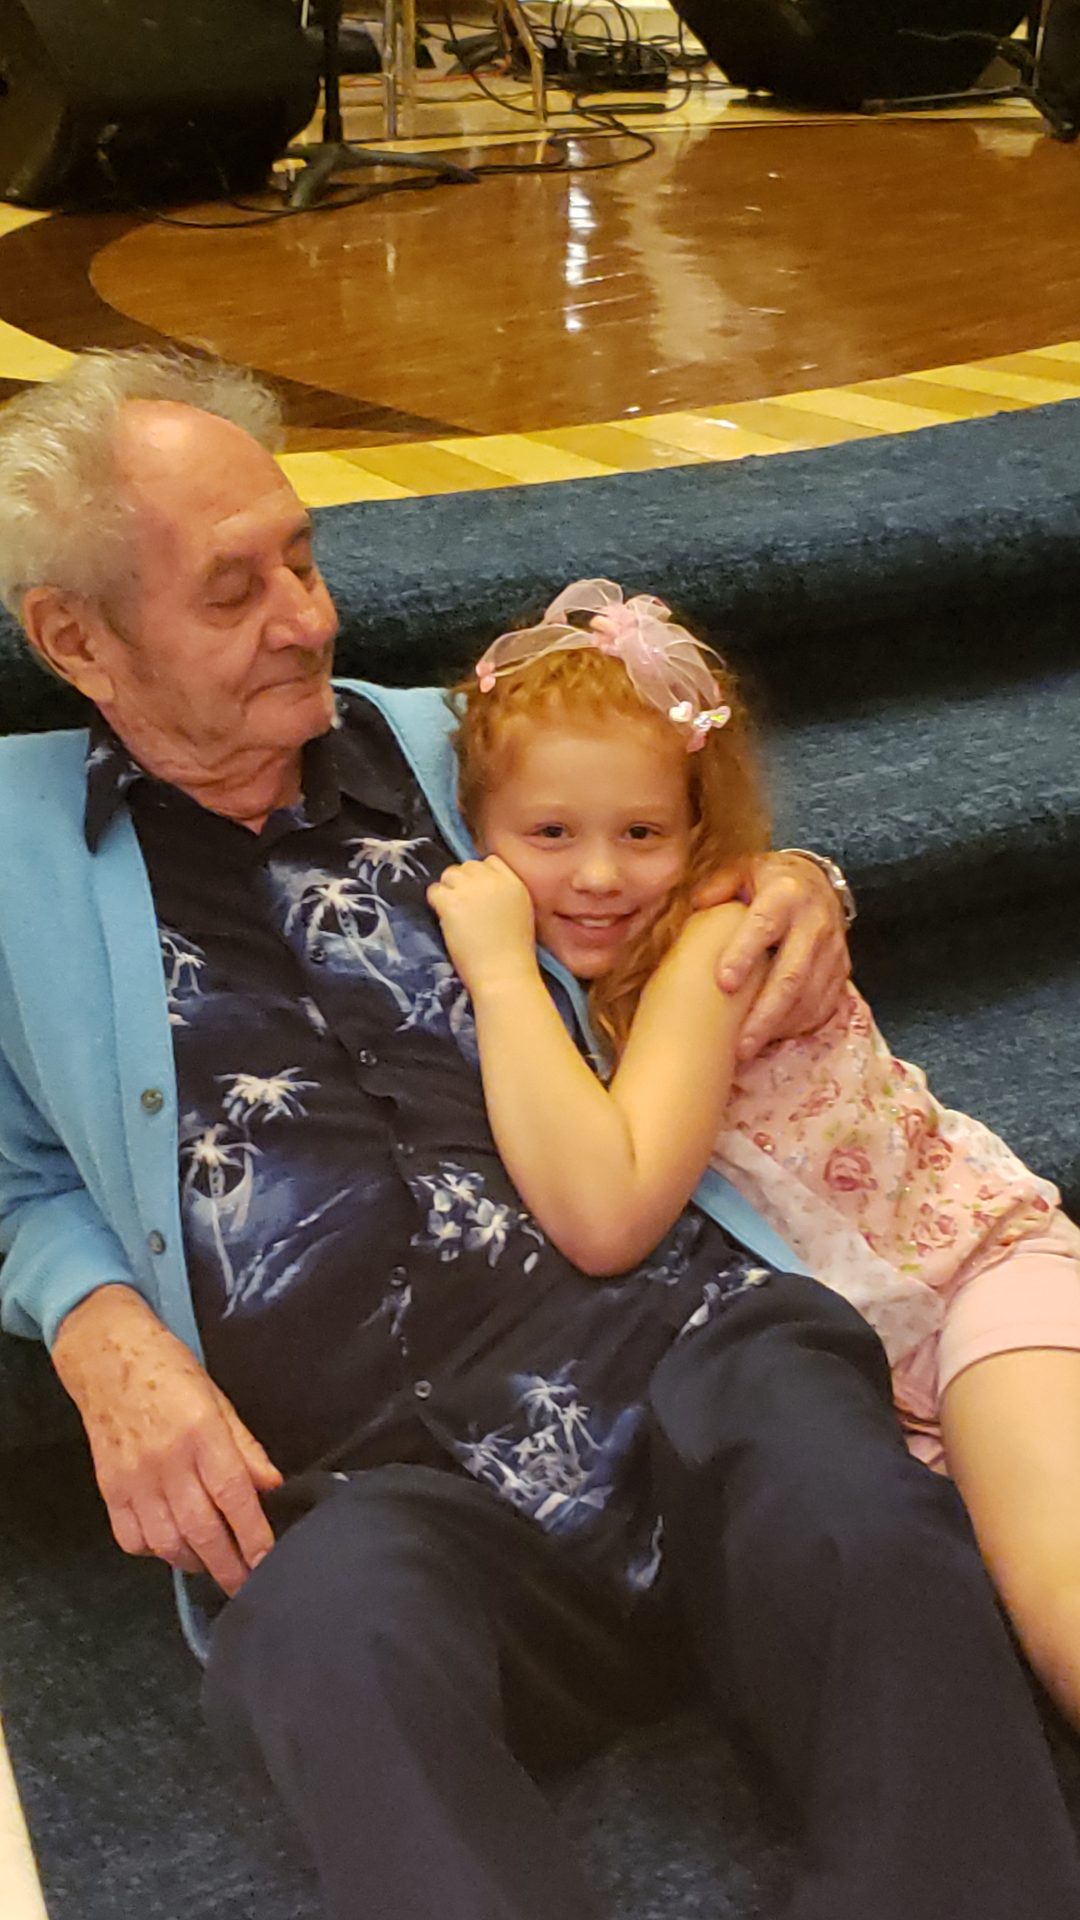 Brianna loved grandpa!